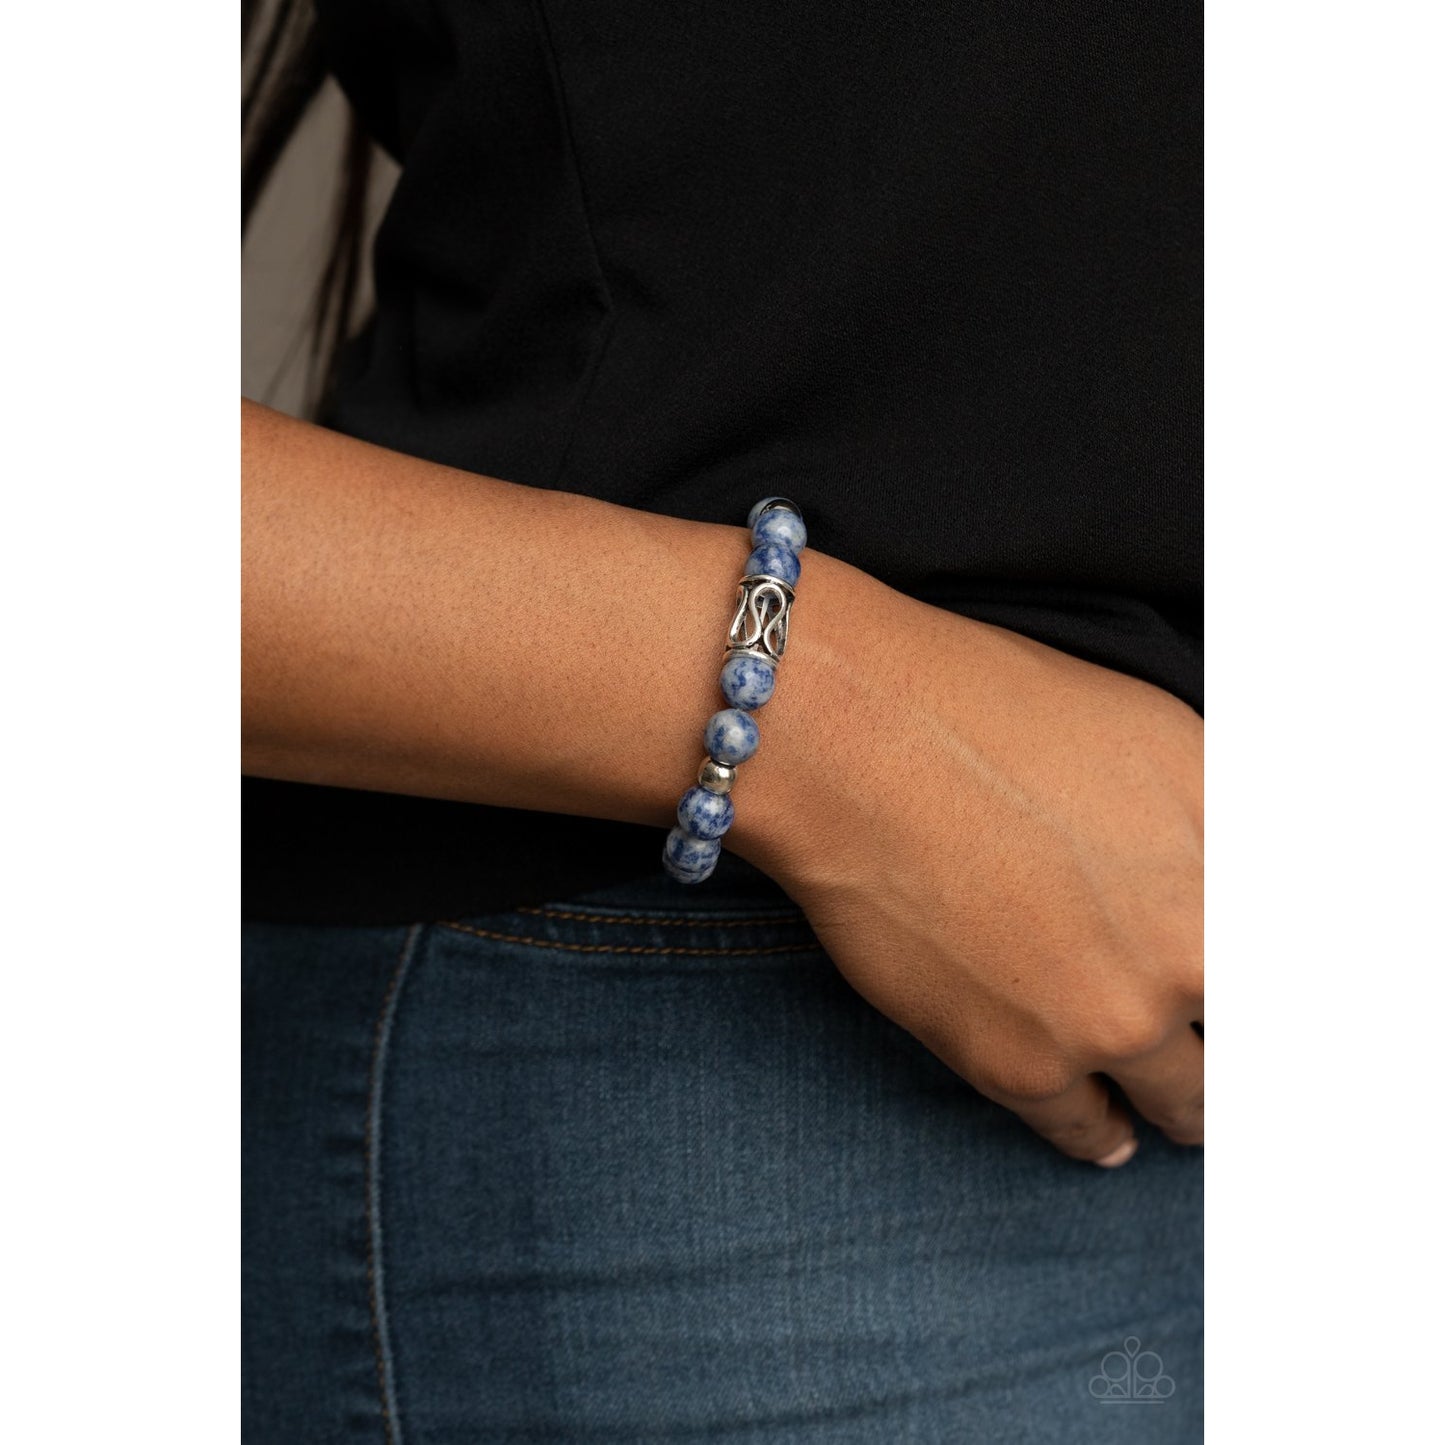 Soothes The Soul - Blue Lapis Lazuli Beads Bracelet - Paparazzi Accessories - GlaMarous Titi Jewels